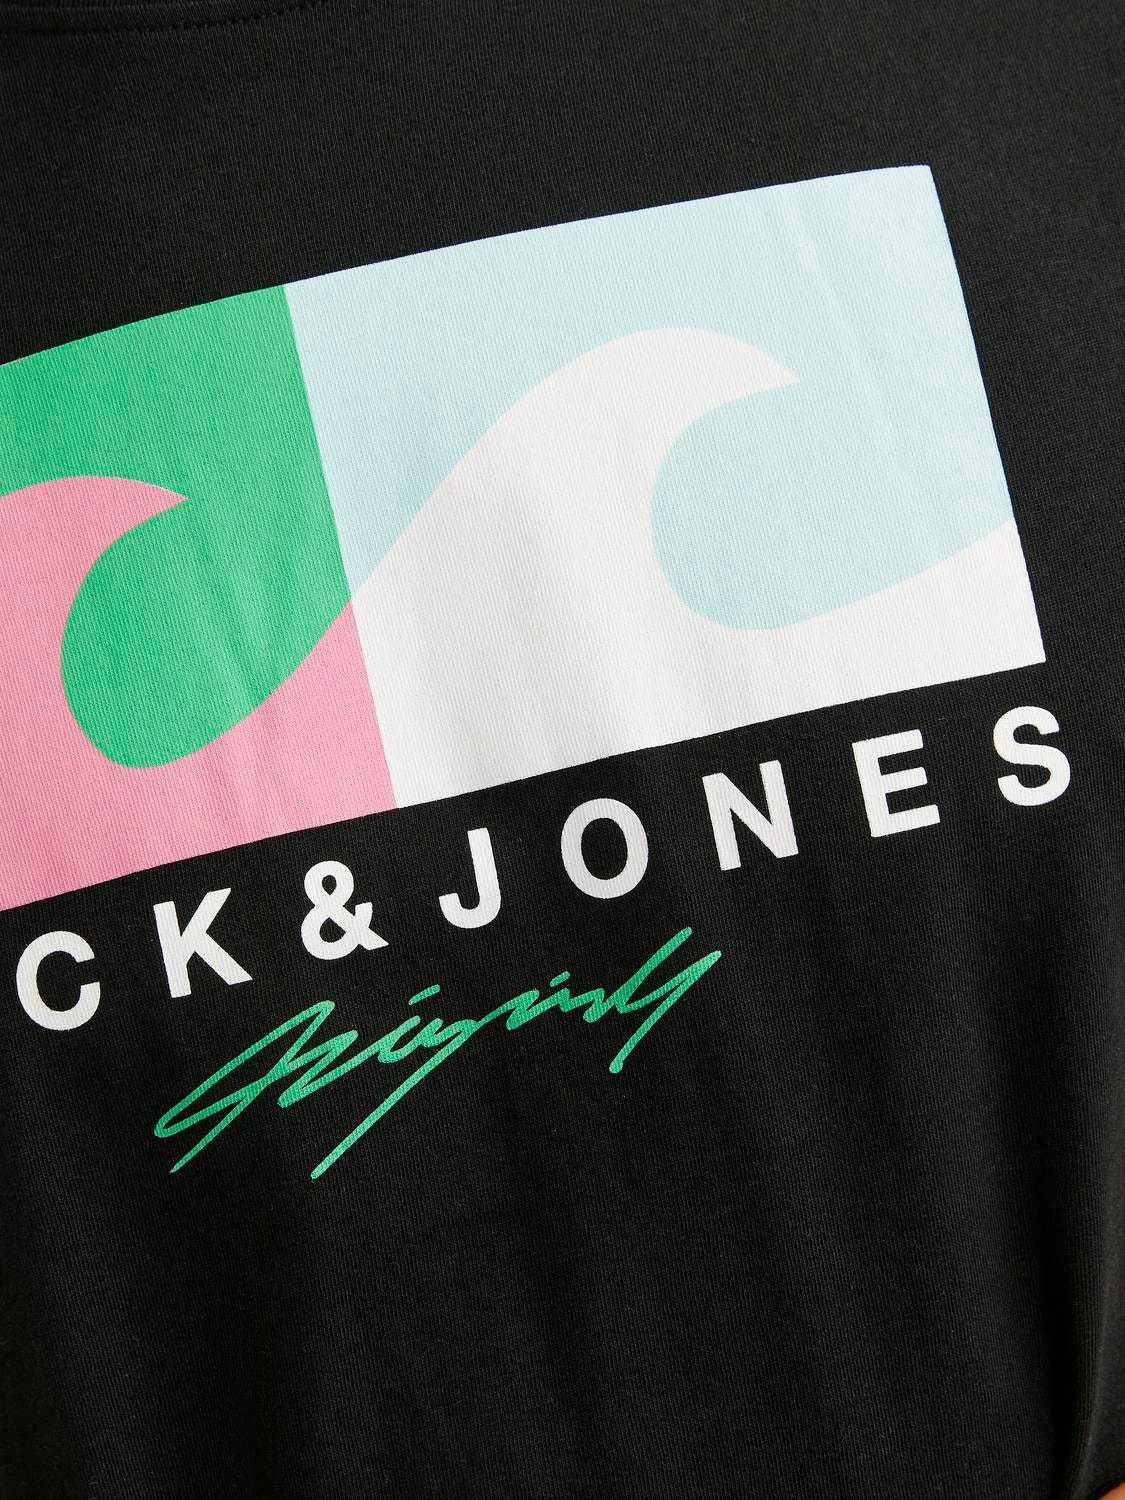 Jack & Jones Καλοκαιρινό μπλουζάκι -Black - 12255038